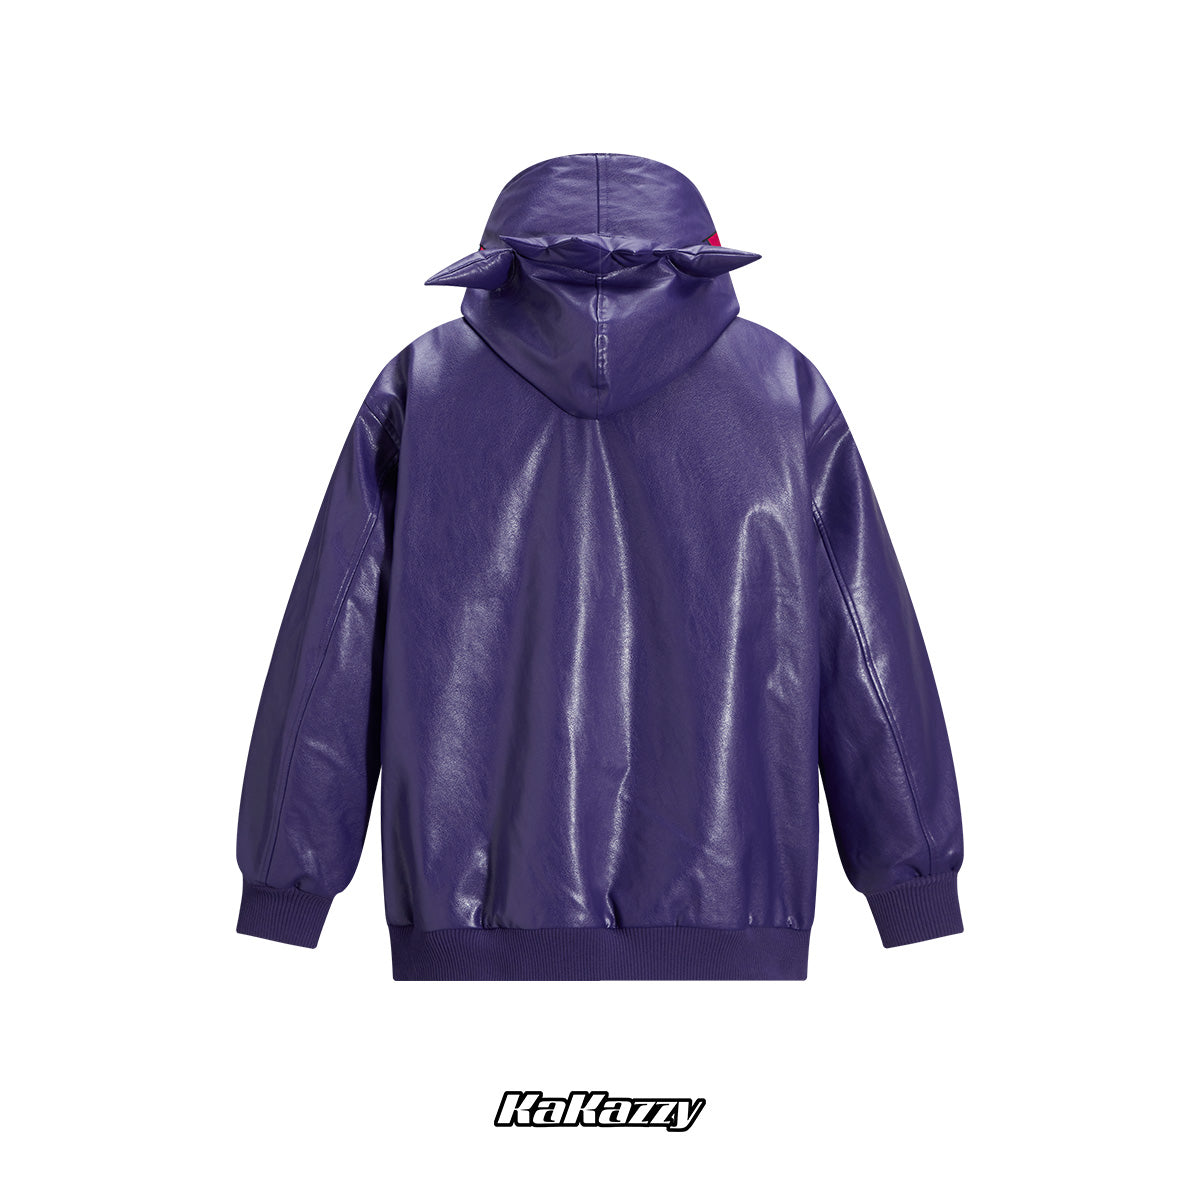 Kakazzy Leather Jacket Purple